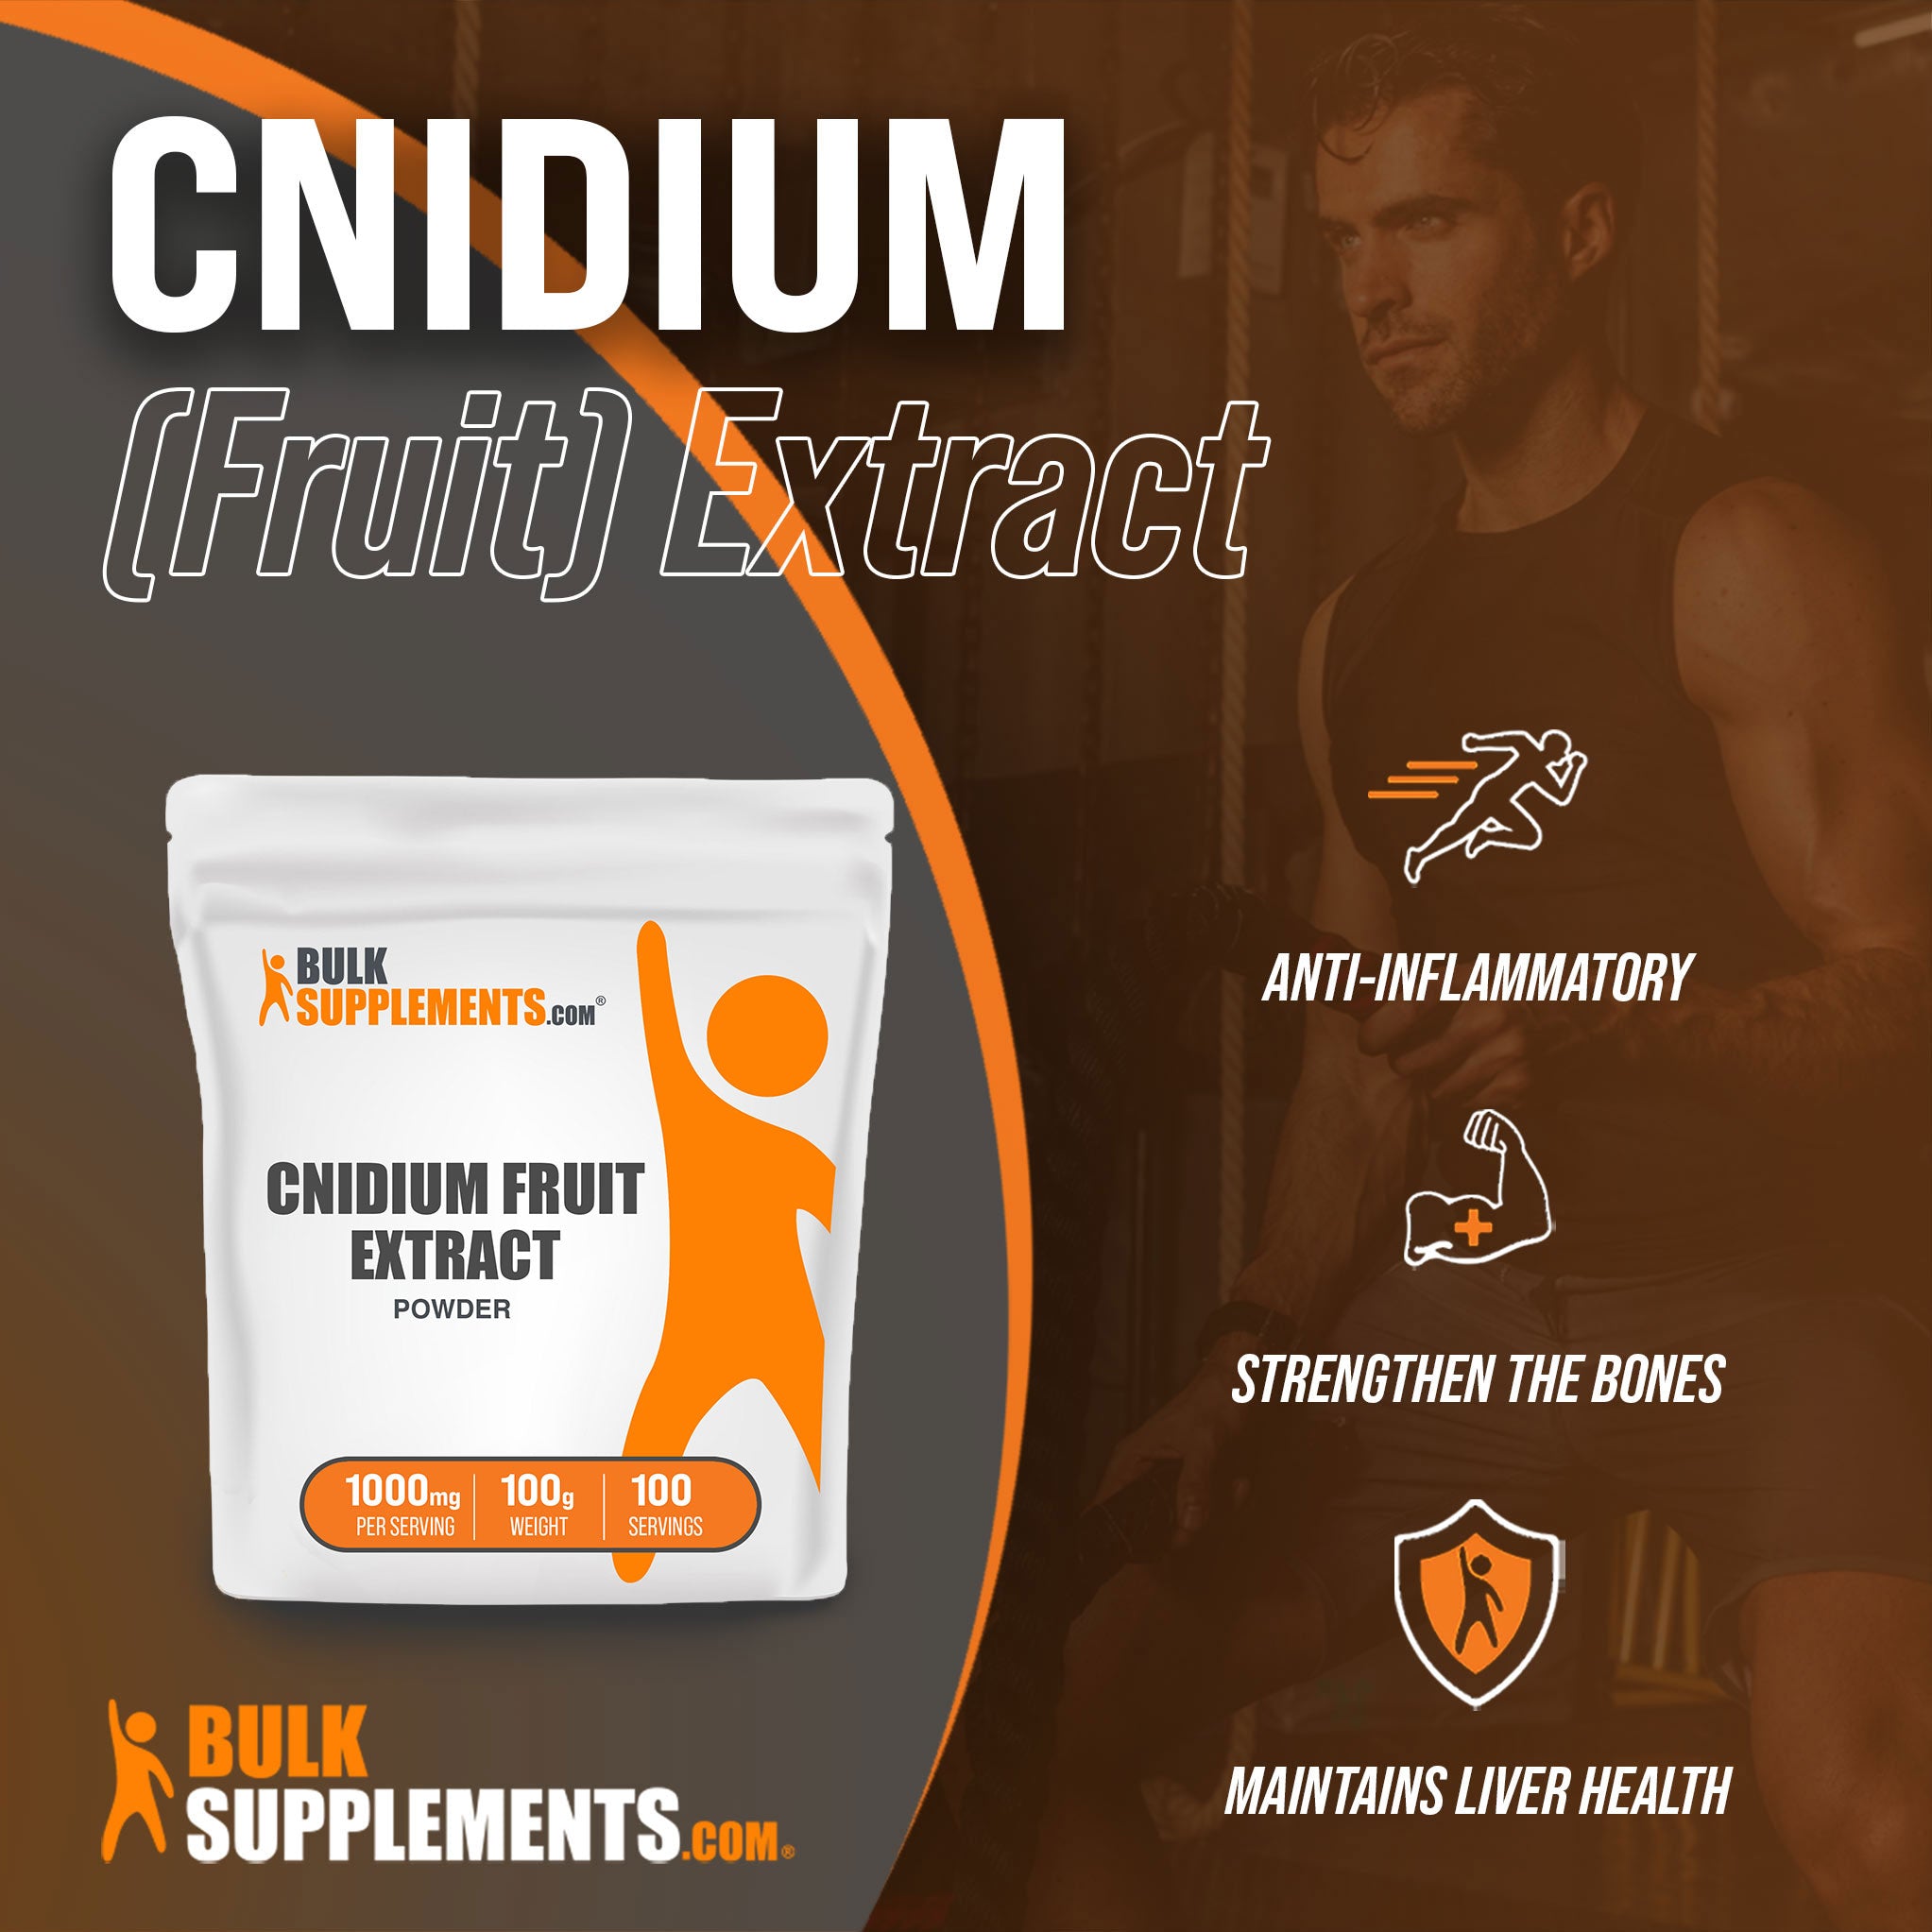 Benefits of Cnidium Extract anti-inflammatory, strengthen the bones, maintains liver health